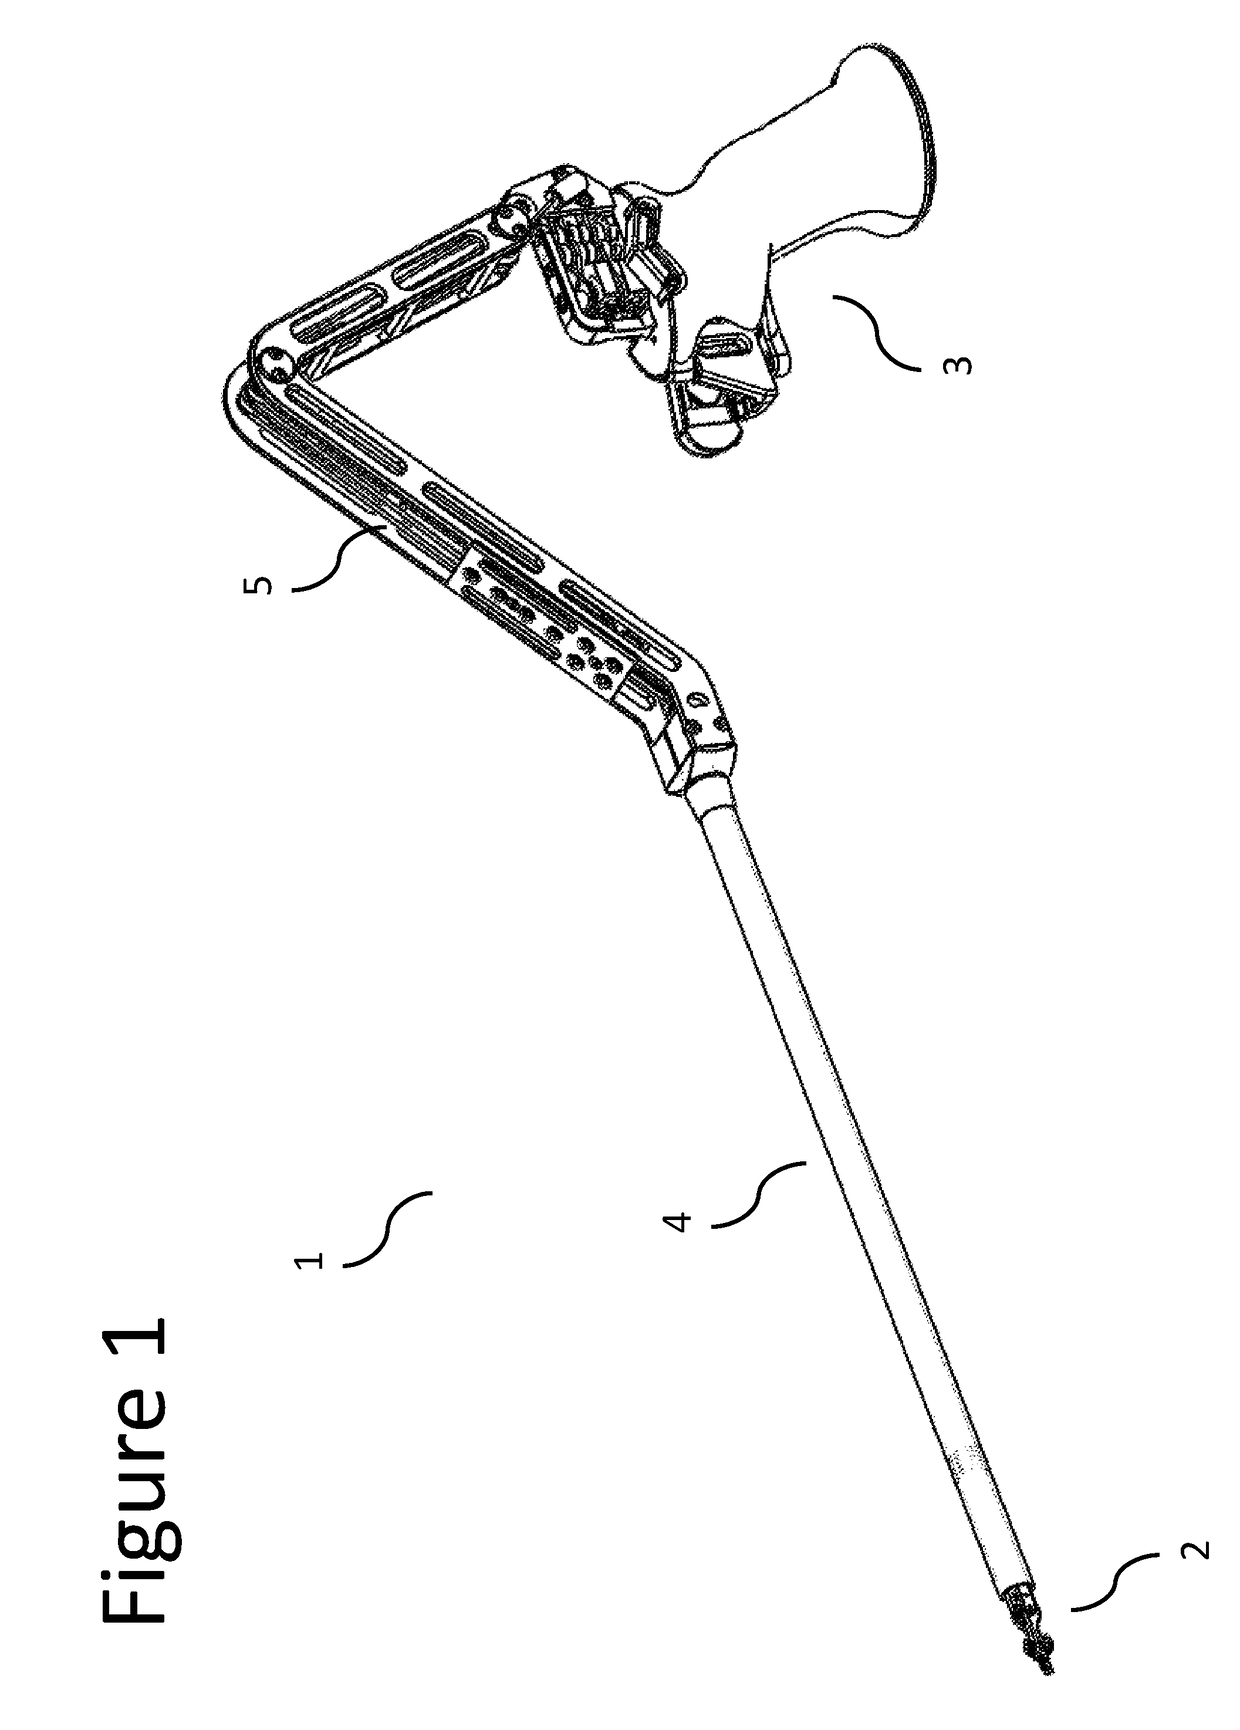 Articulated hand-held instrument